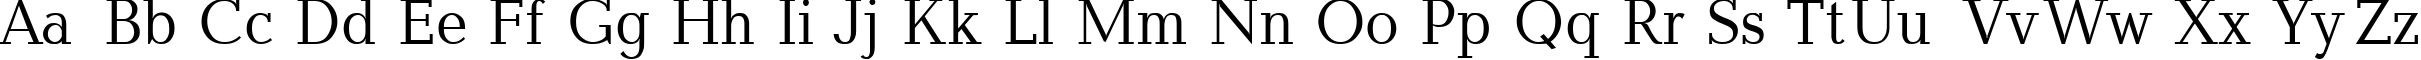 Пример написания английского алфавита шрифтом XBaltica_90n